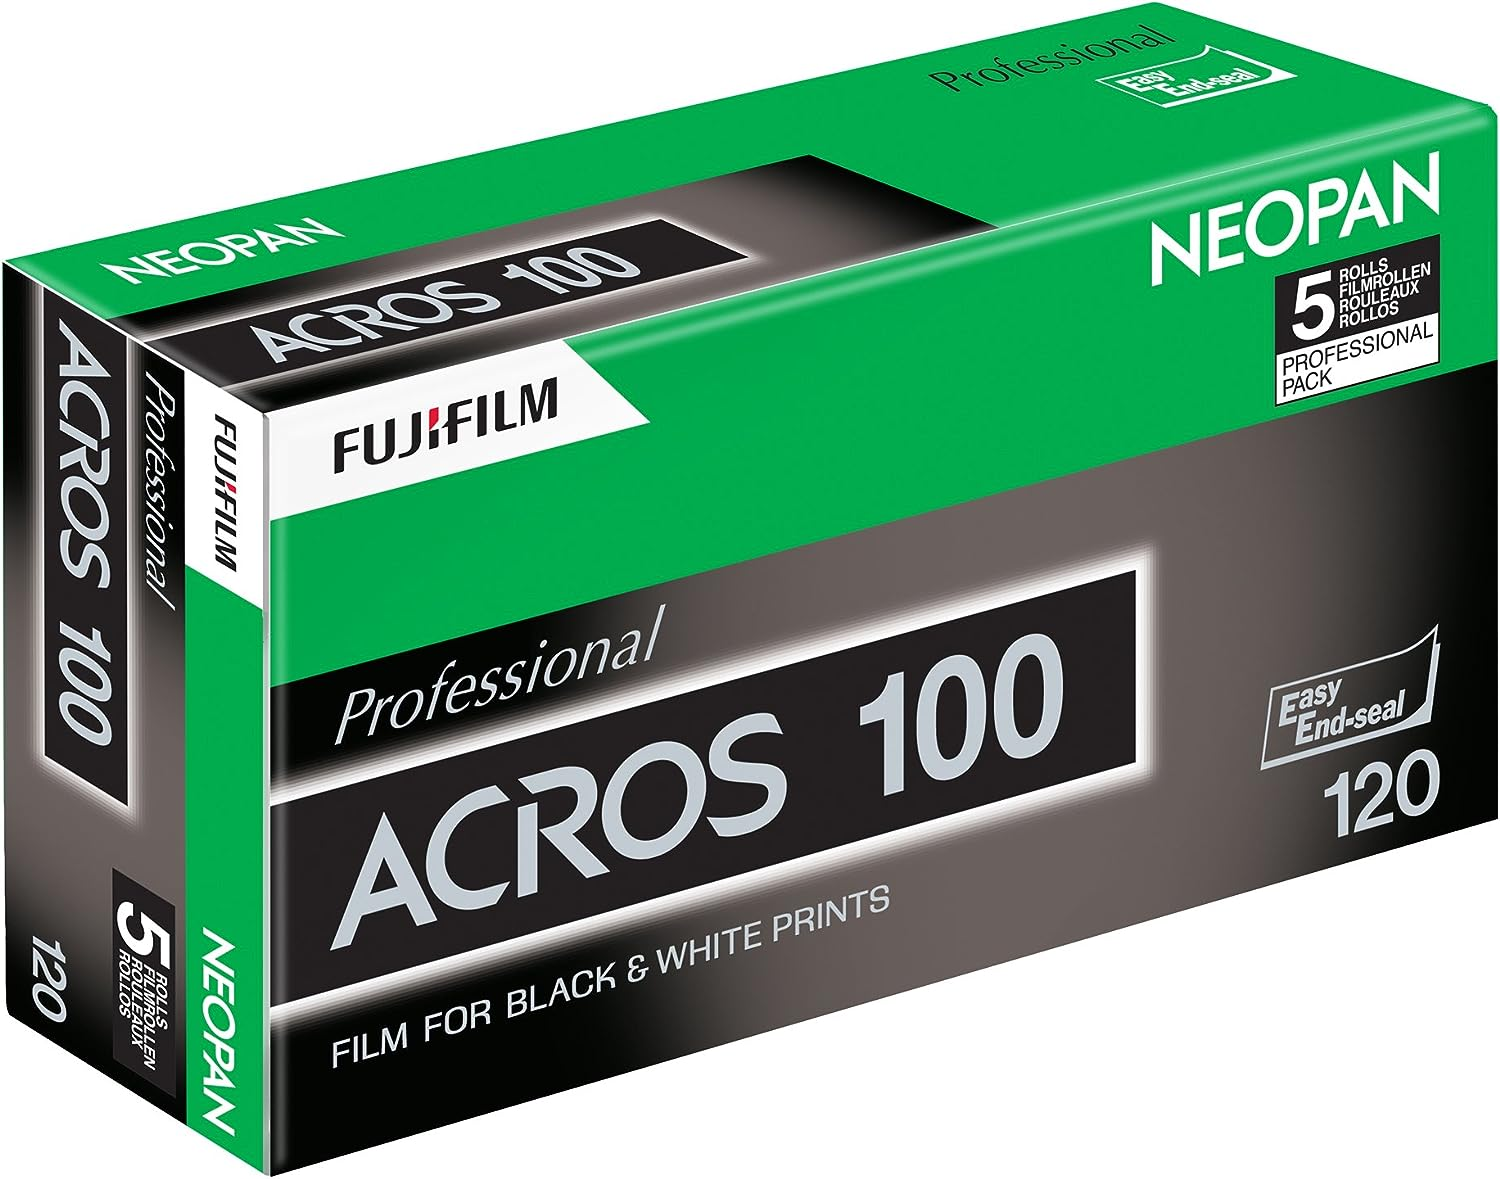 Fujifilm Neopan Acros 100 120 Propack Black and White Film (5 Roll Box) (EXP. 10/2019)